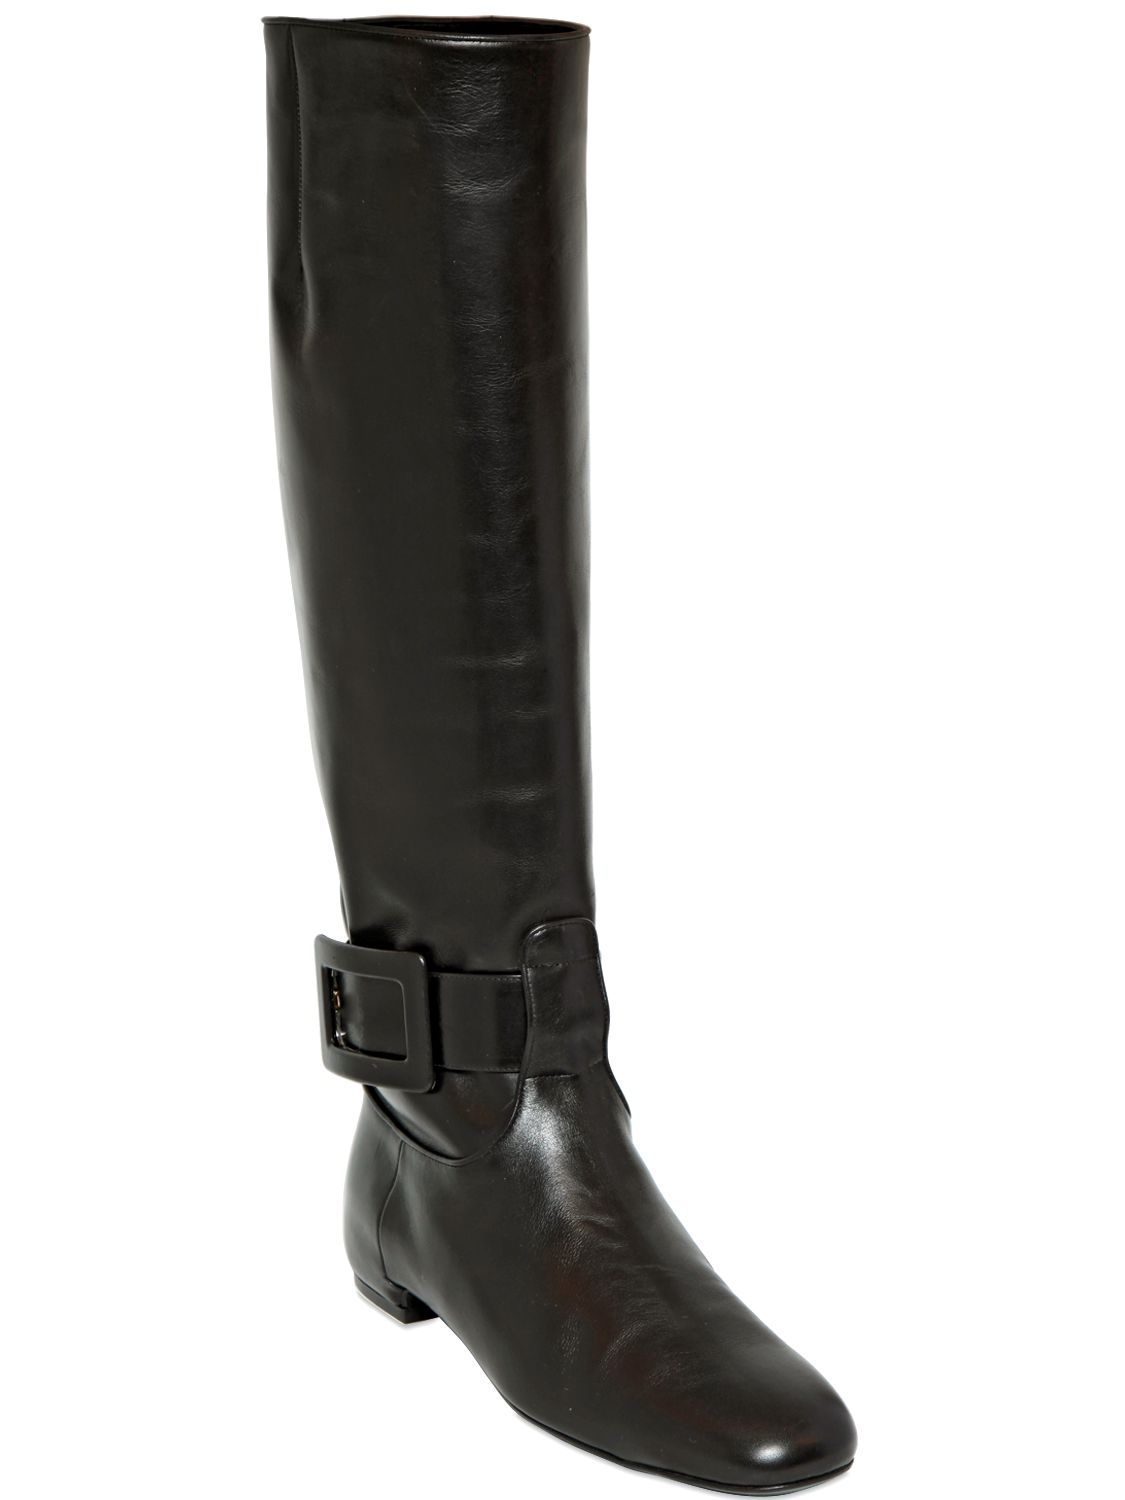 Lyst - Roger Vivier 20mm Jockey Leather Boots in Black